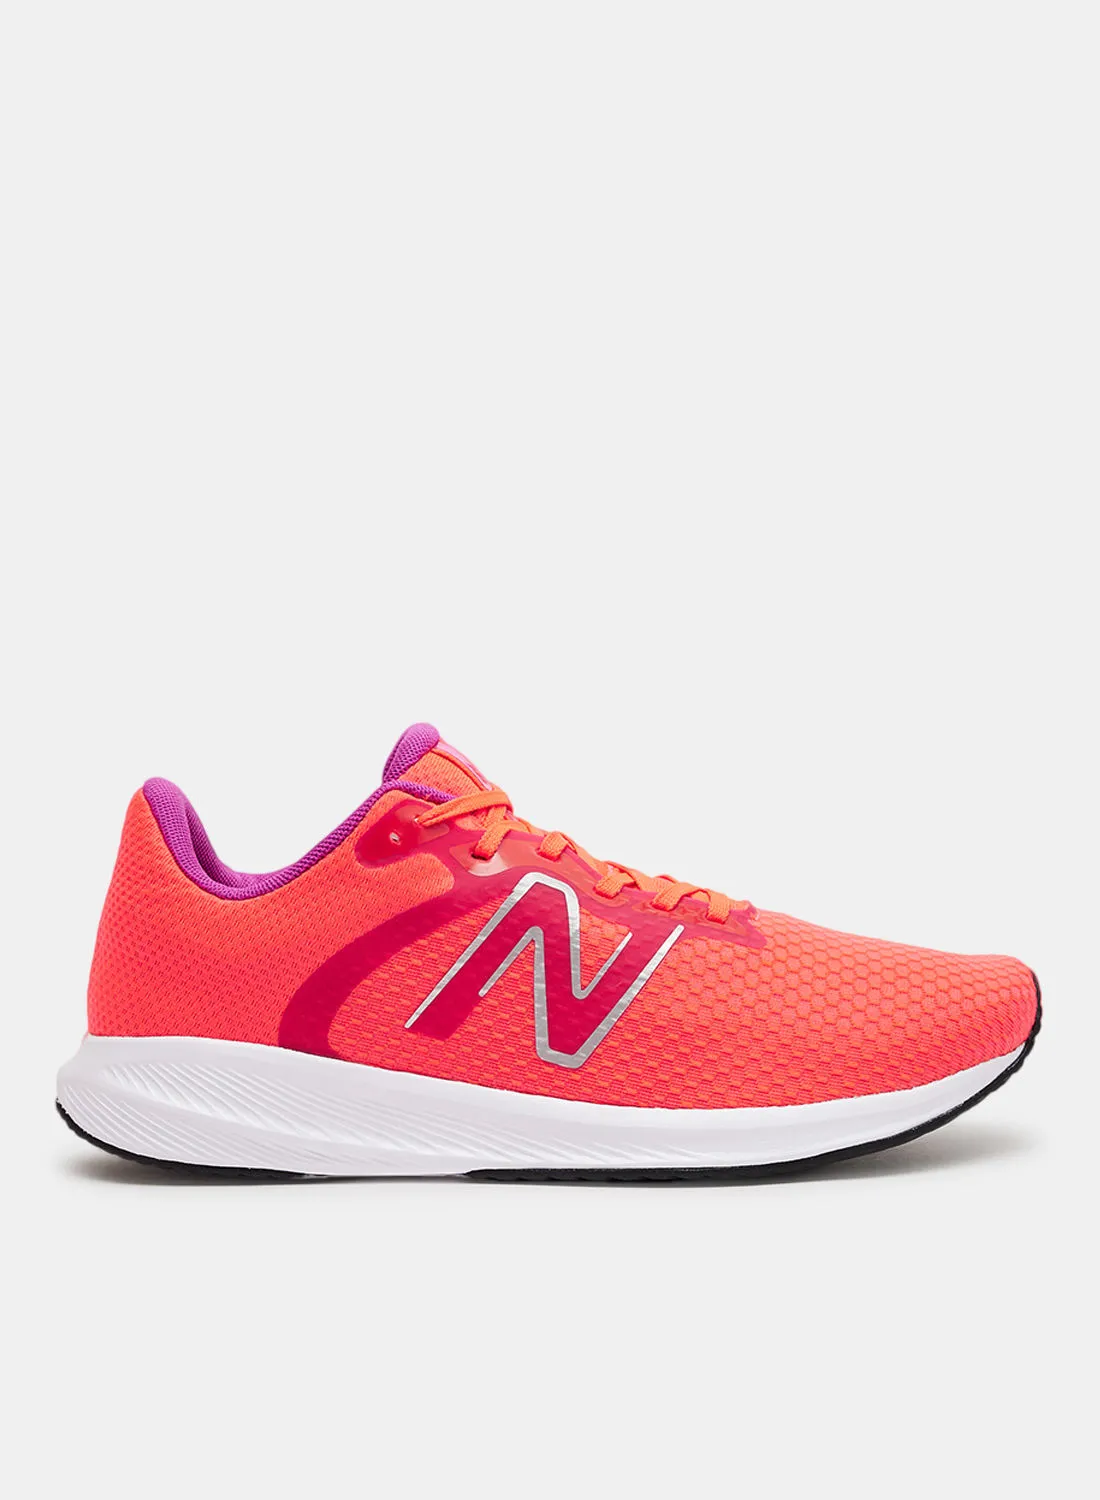 New Balance 413 Running Shoes